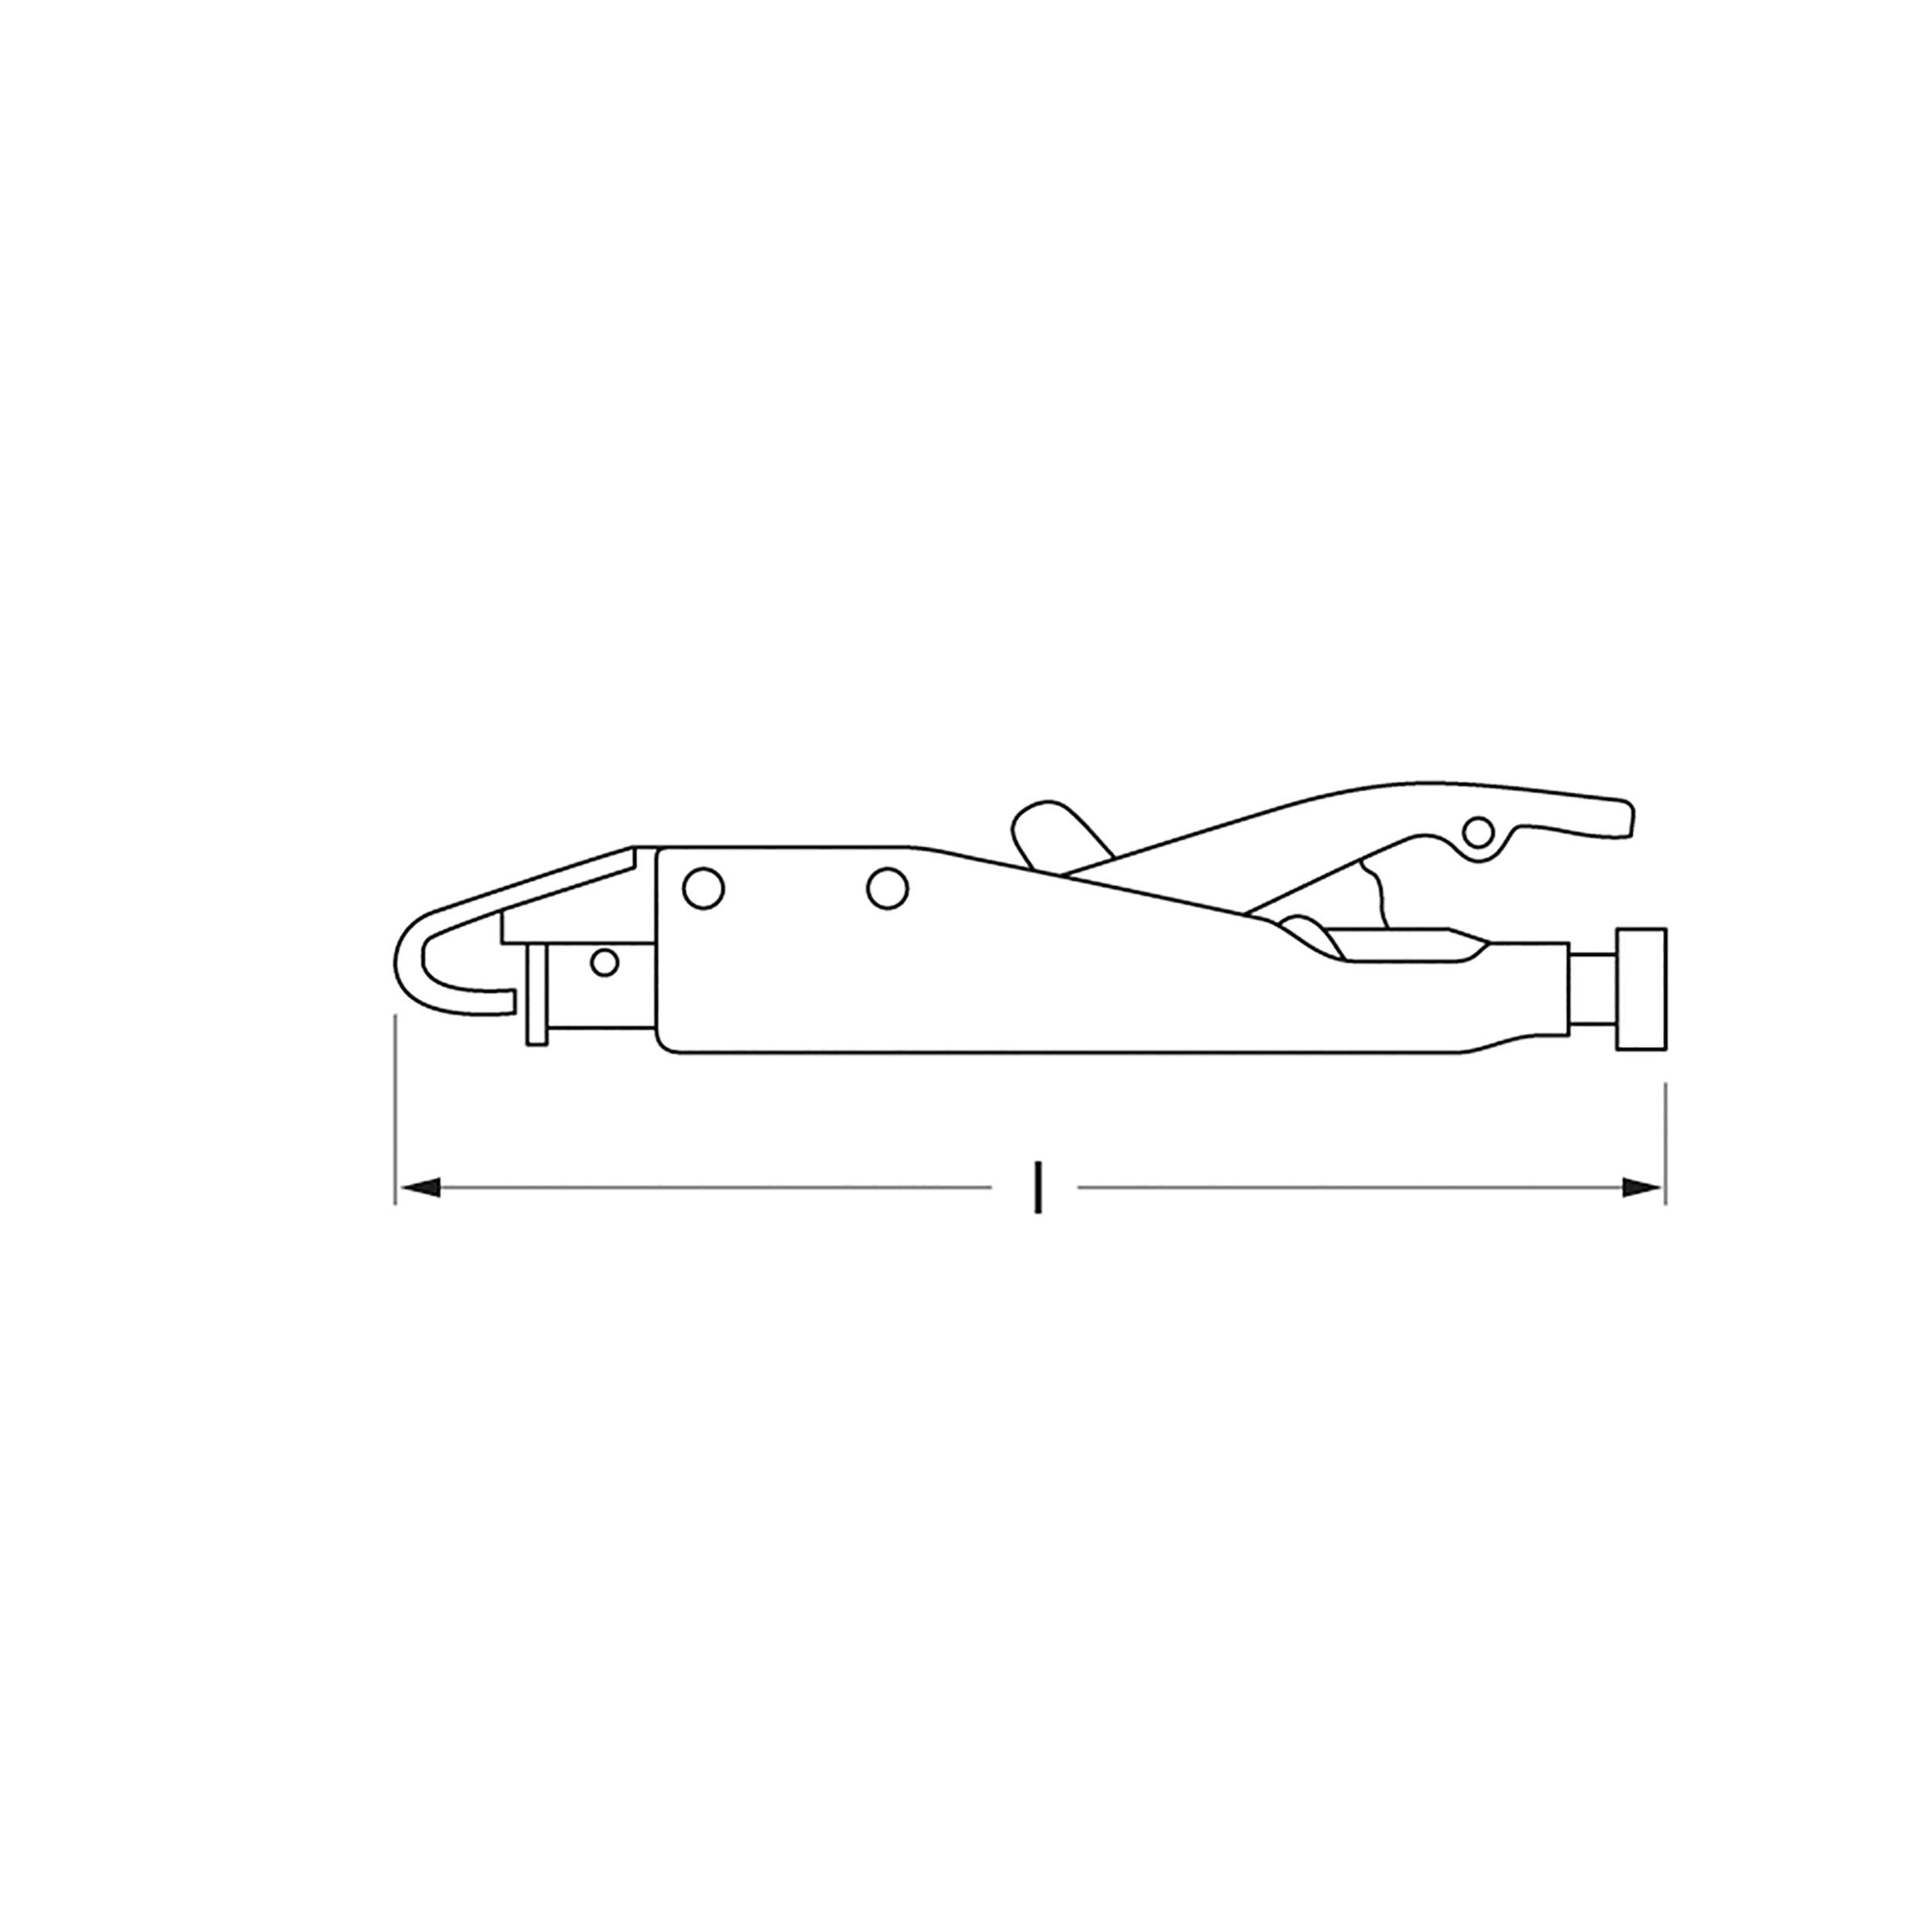 Axial-Gripzange, Typ J, 210 mm, MATADOR Art.-Nr.: 05870007